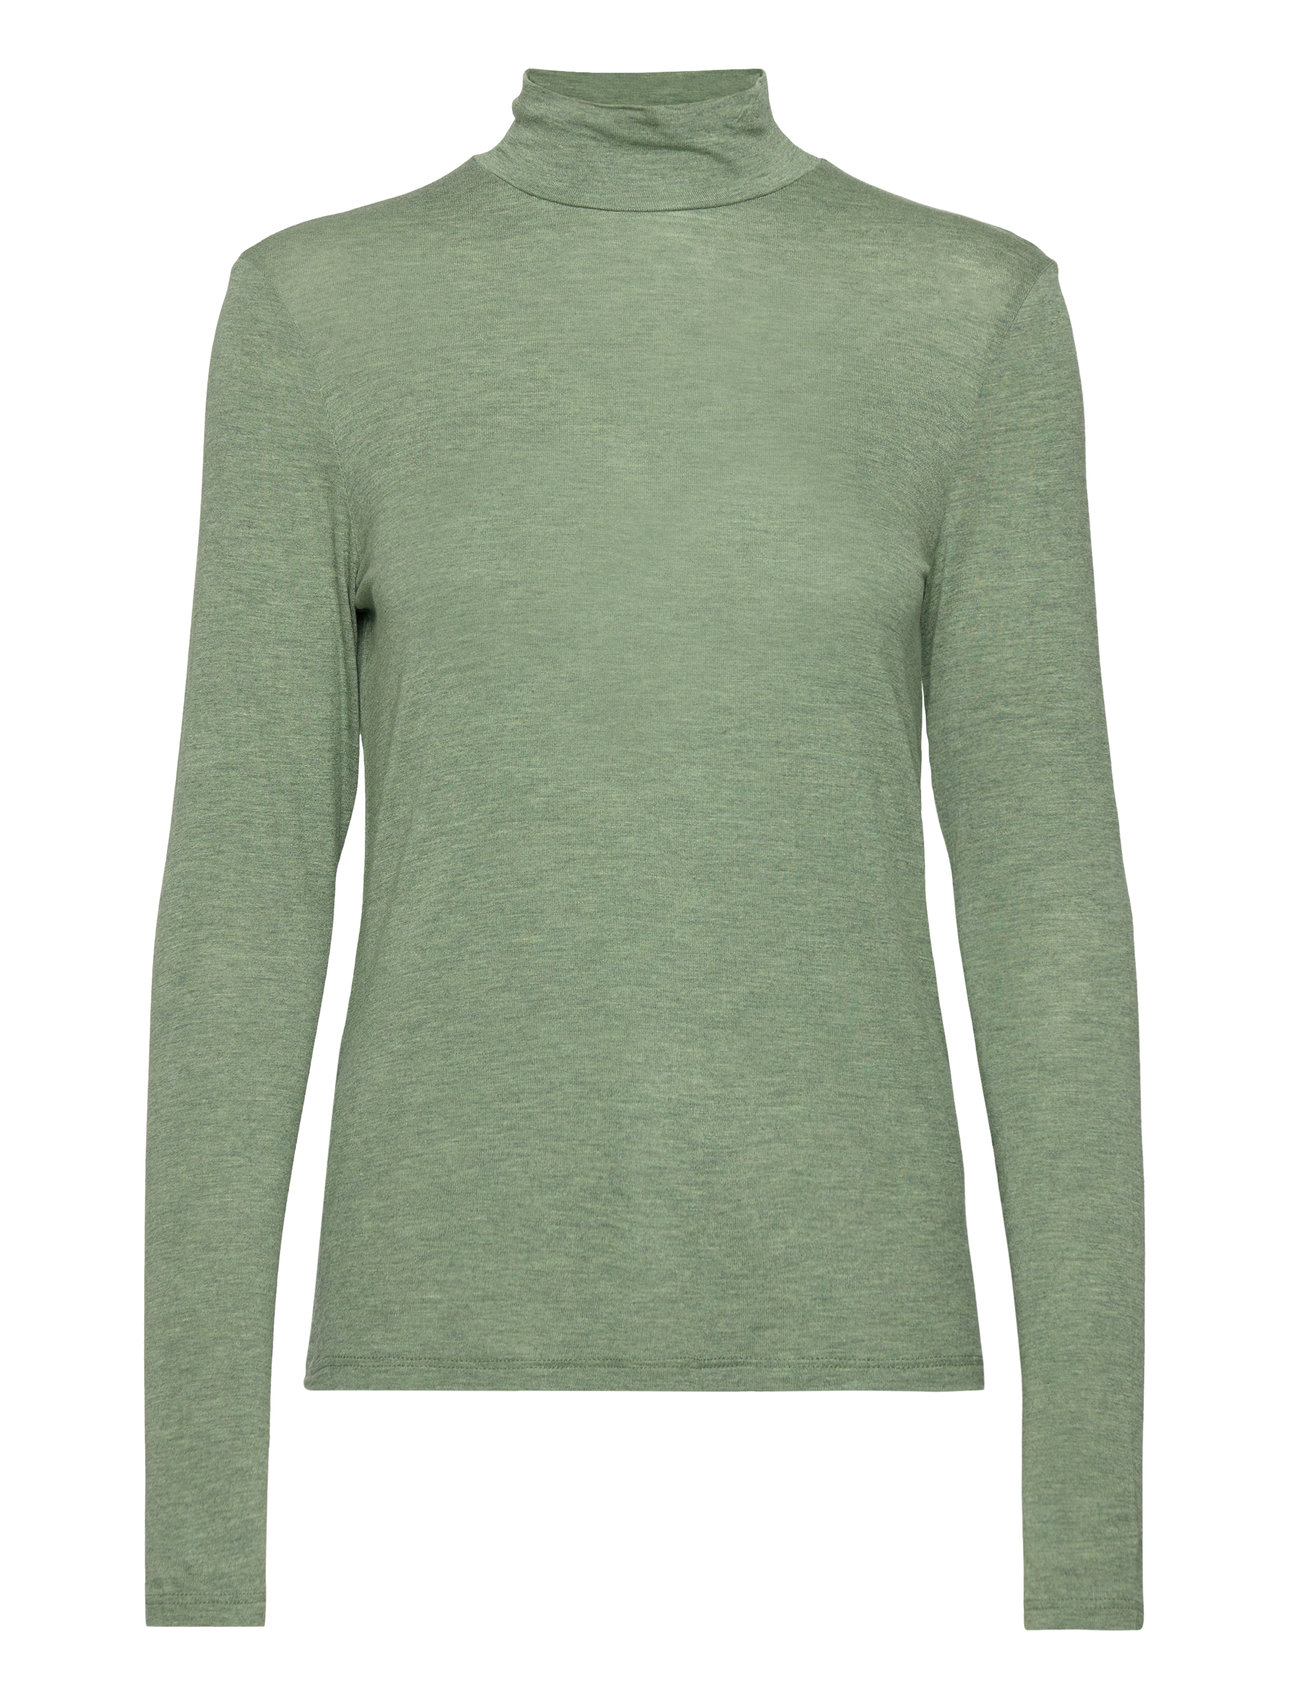 Turtleneck Long-Sleeved T-Shirt Tops T-shirts & Tops Long-sleeved Green Mango